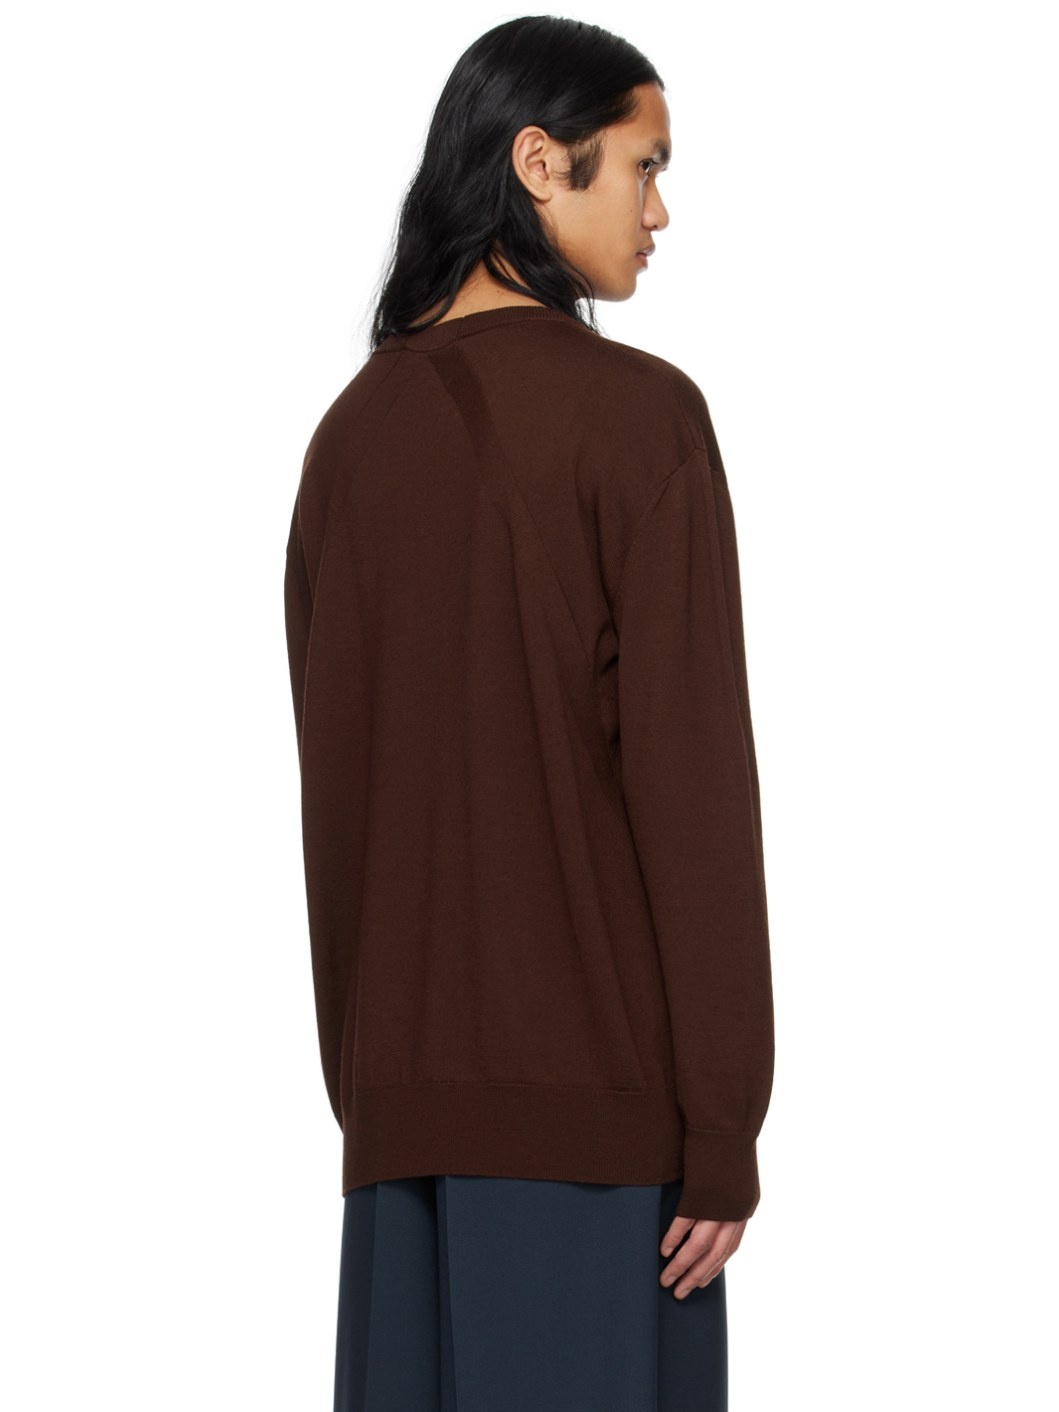 Brown Crewneck Sweater - 3